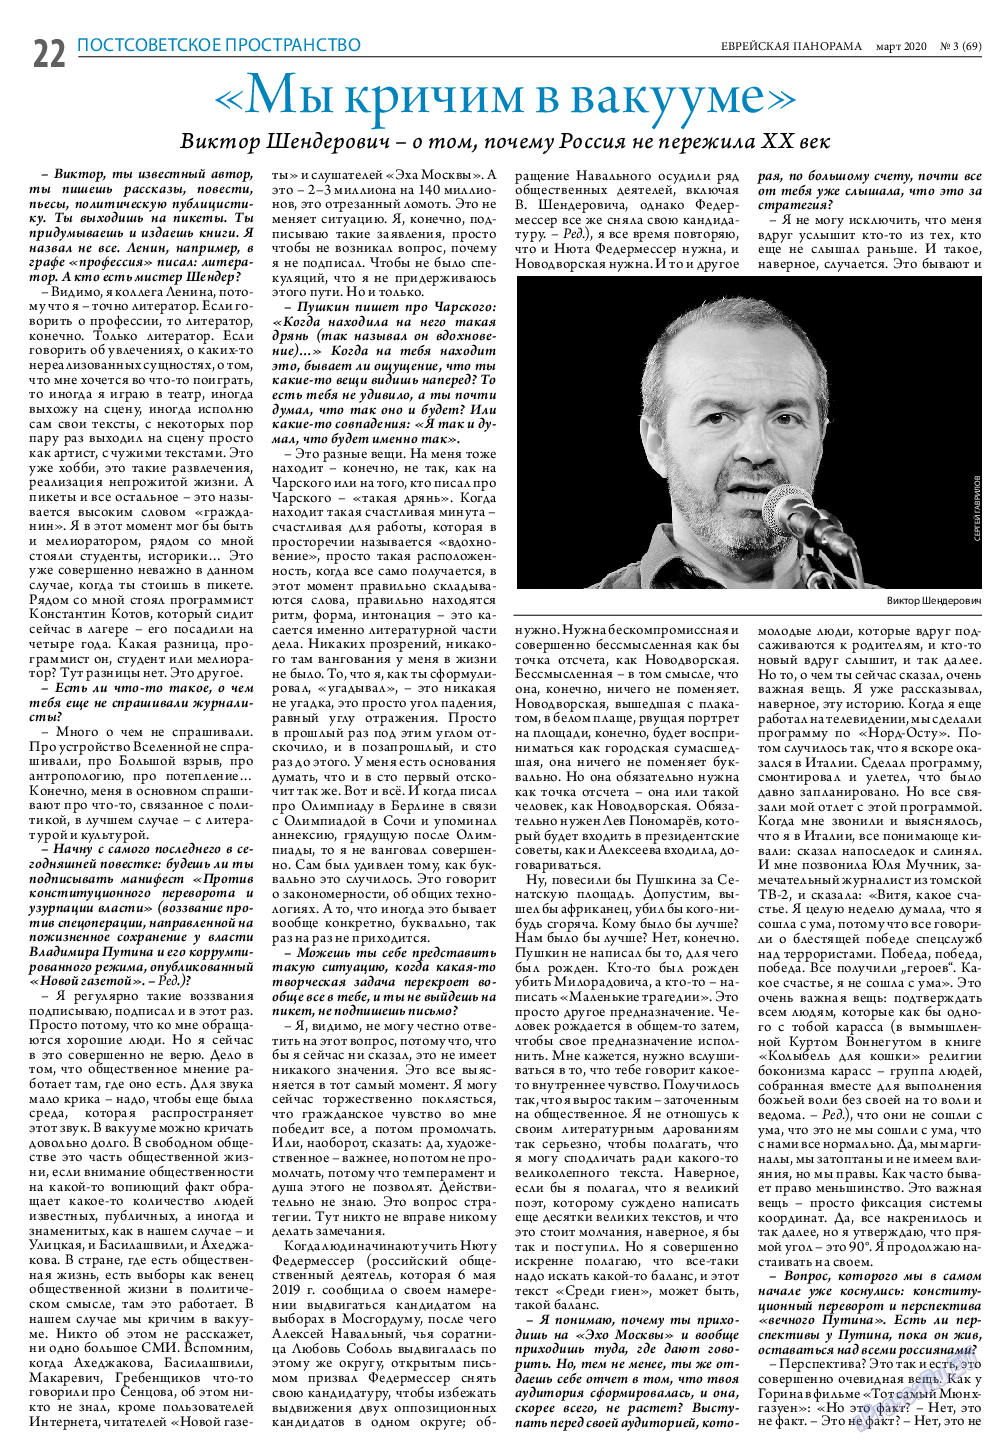 Еврейская панорама, газета. 2020 №3 стр.22